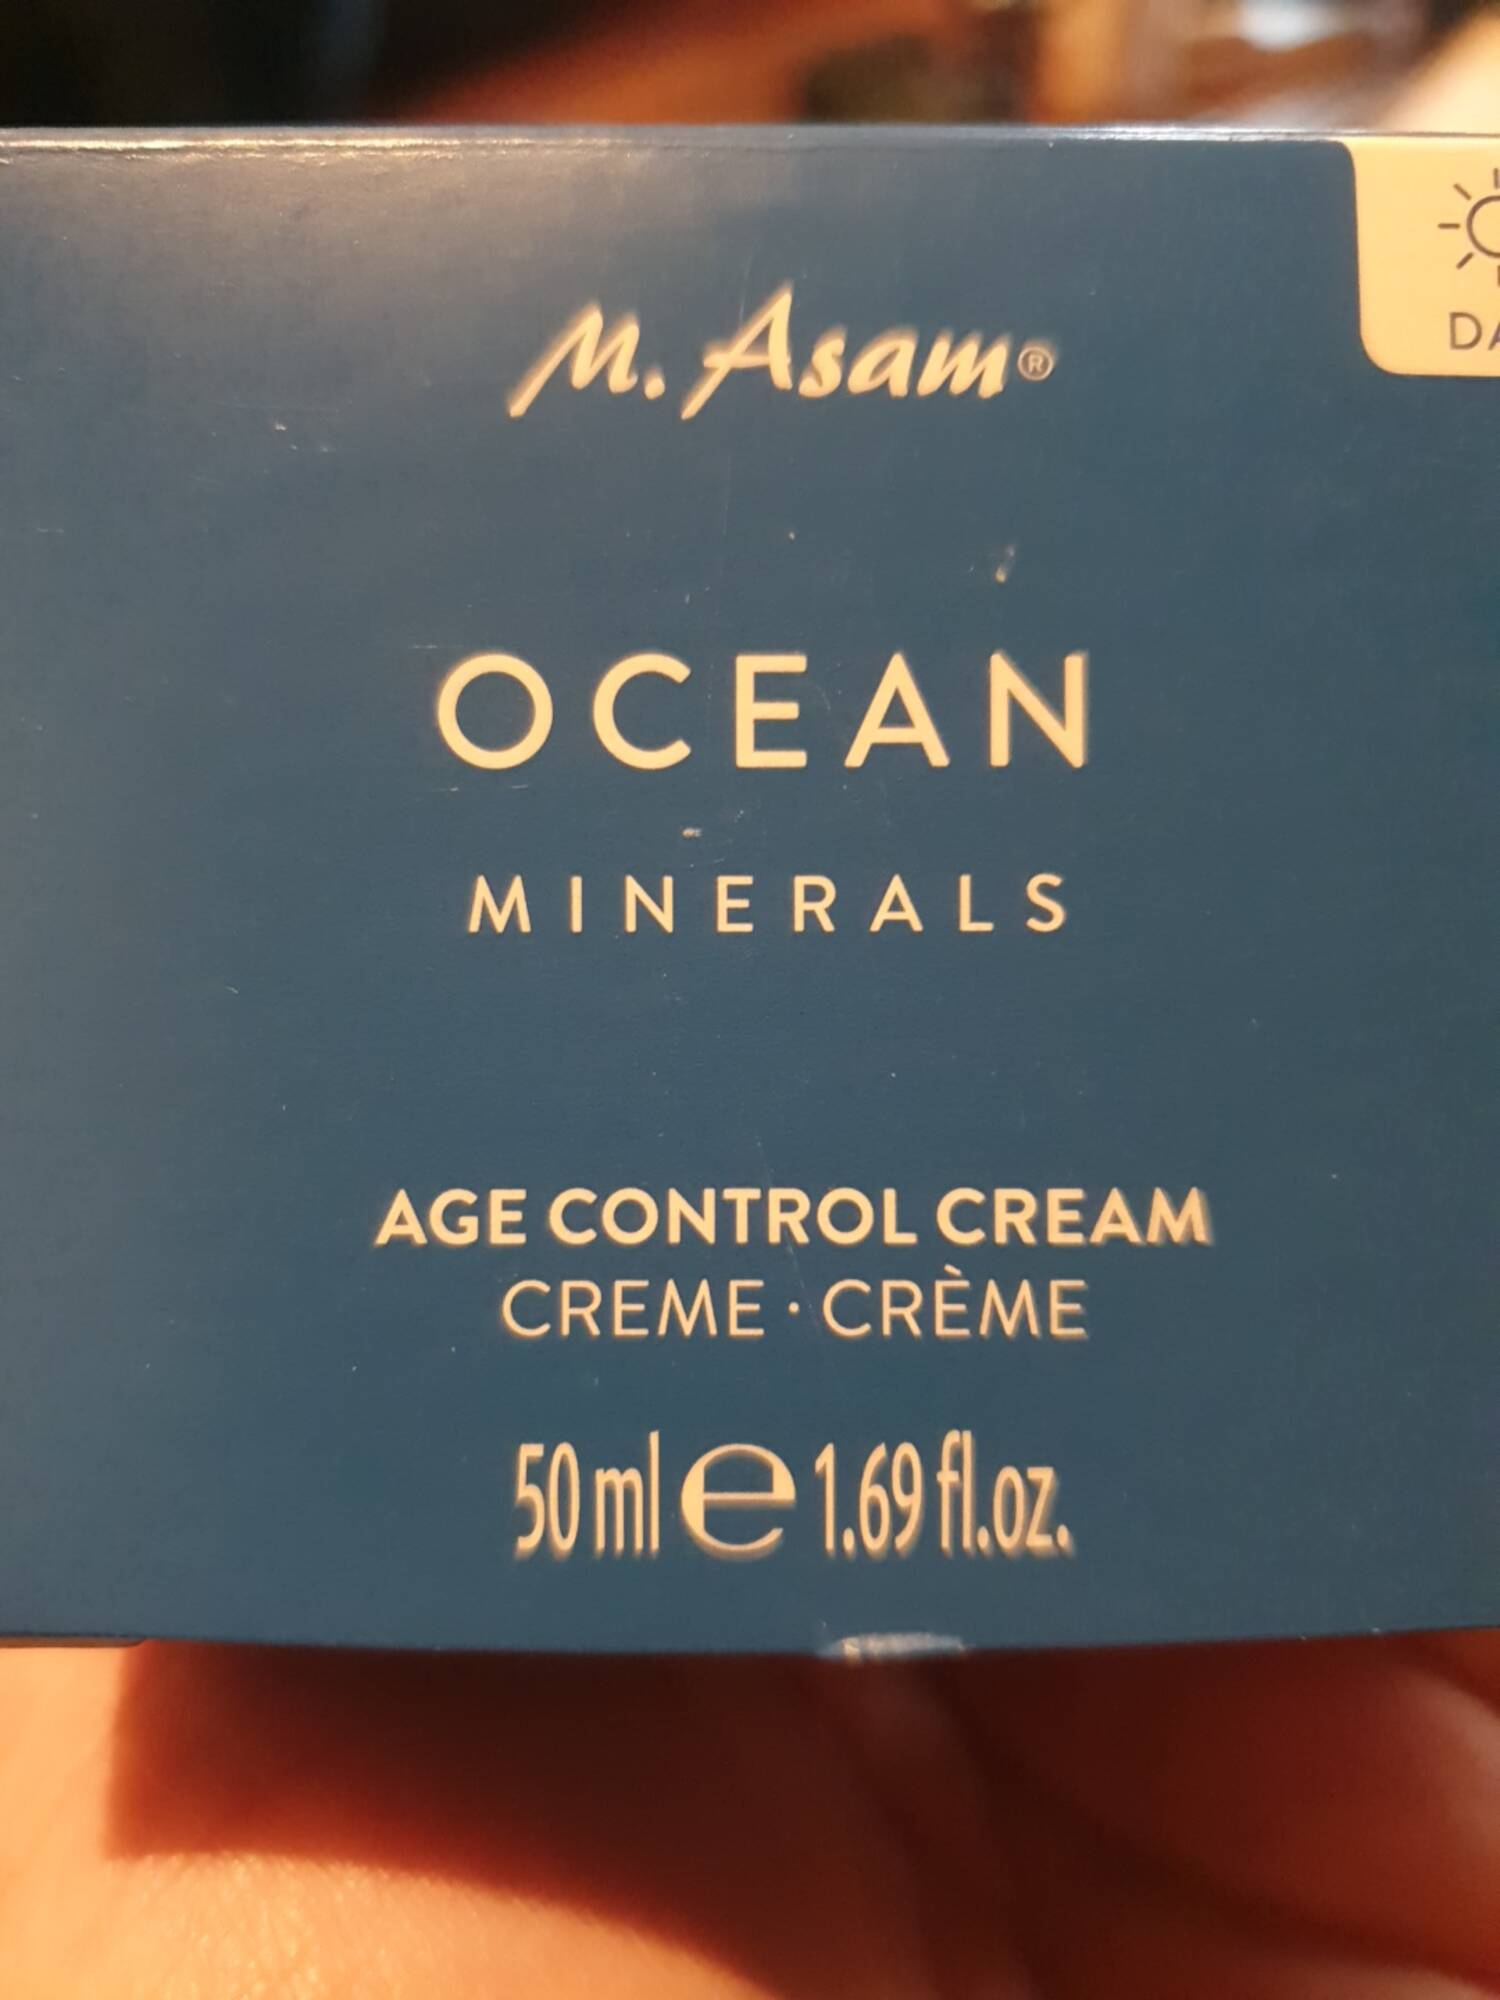 M. ASAM - Ocean minerals - Age control cream 